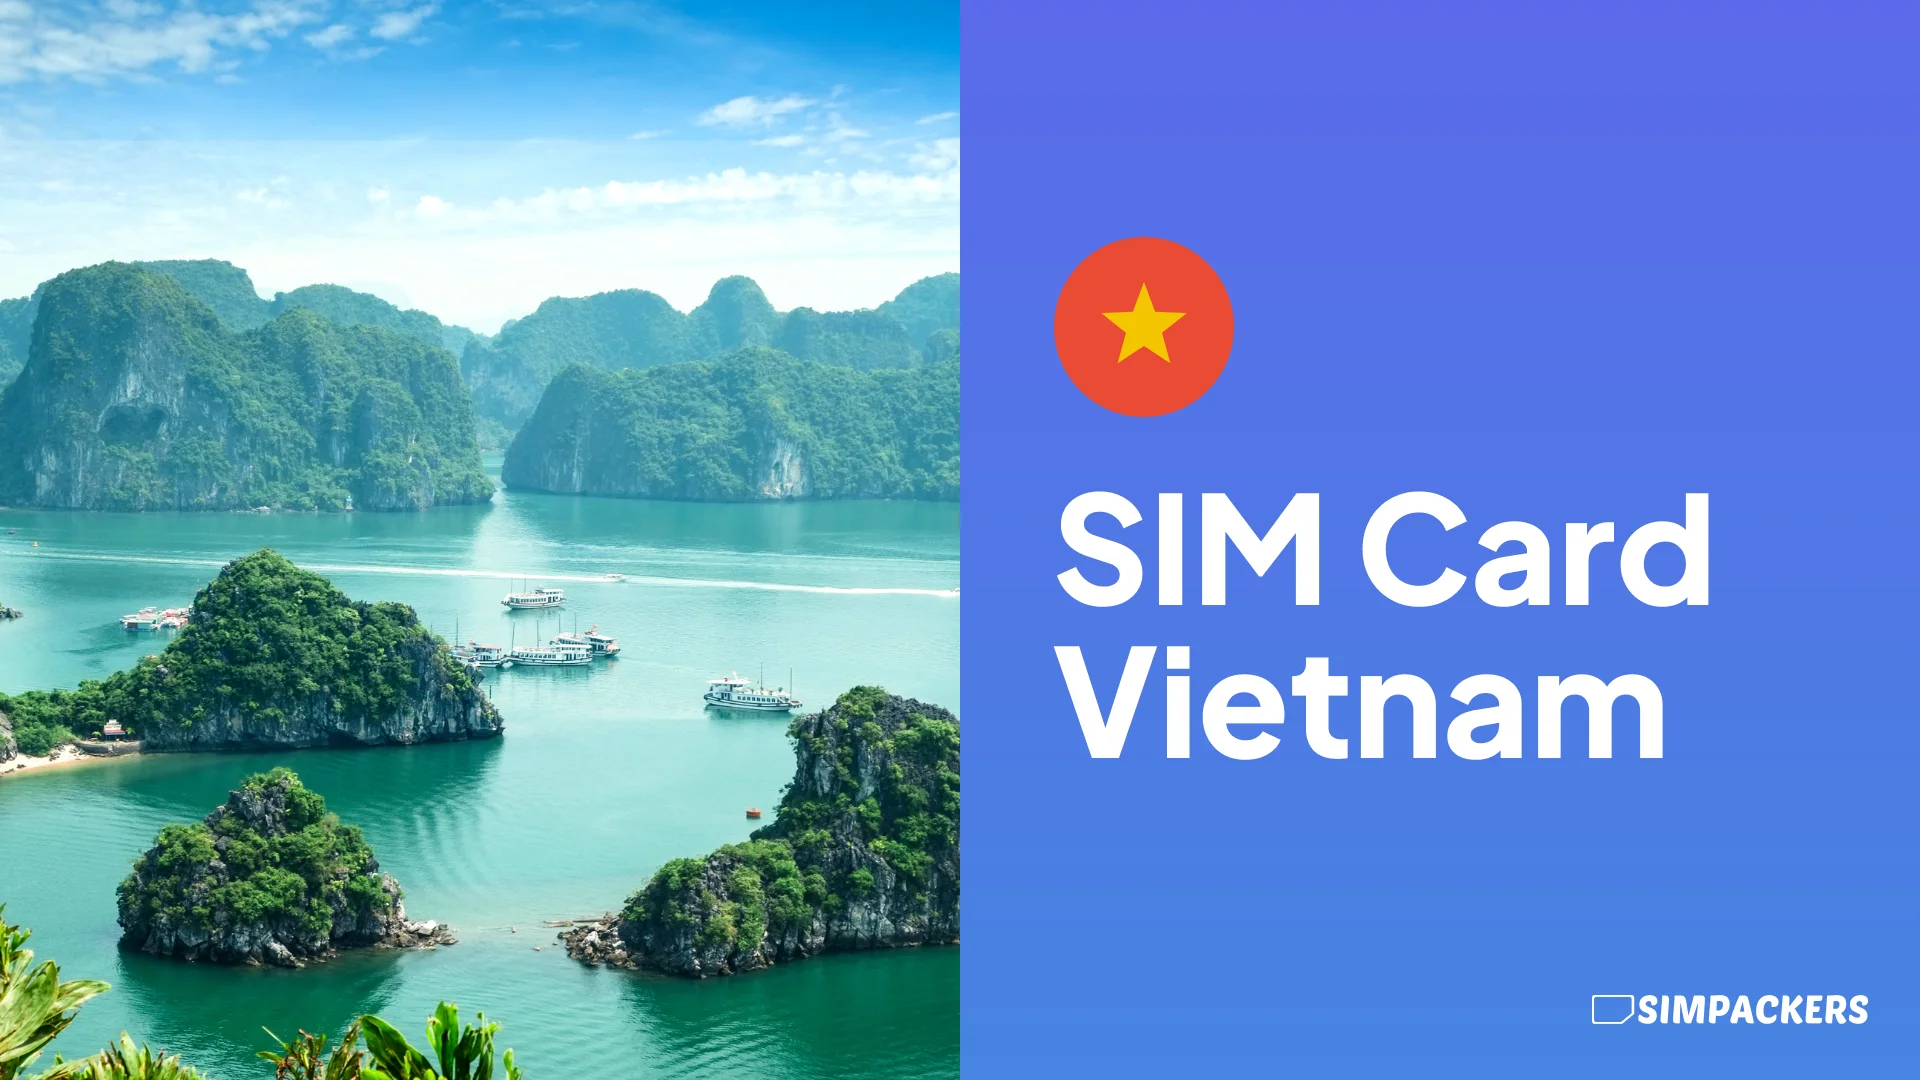 EN/FEATURED_IMAGES/sim-card-vietnam.webp